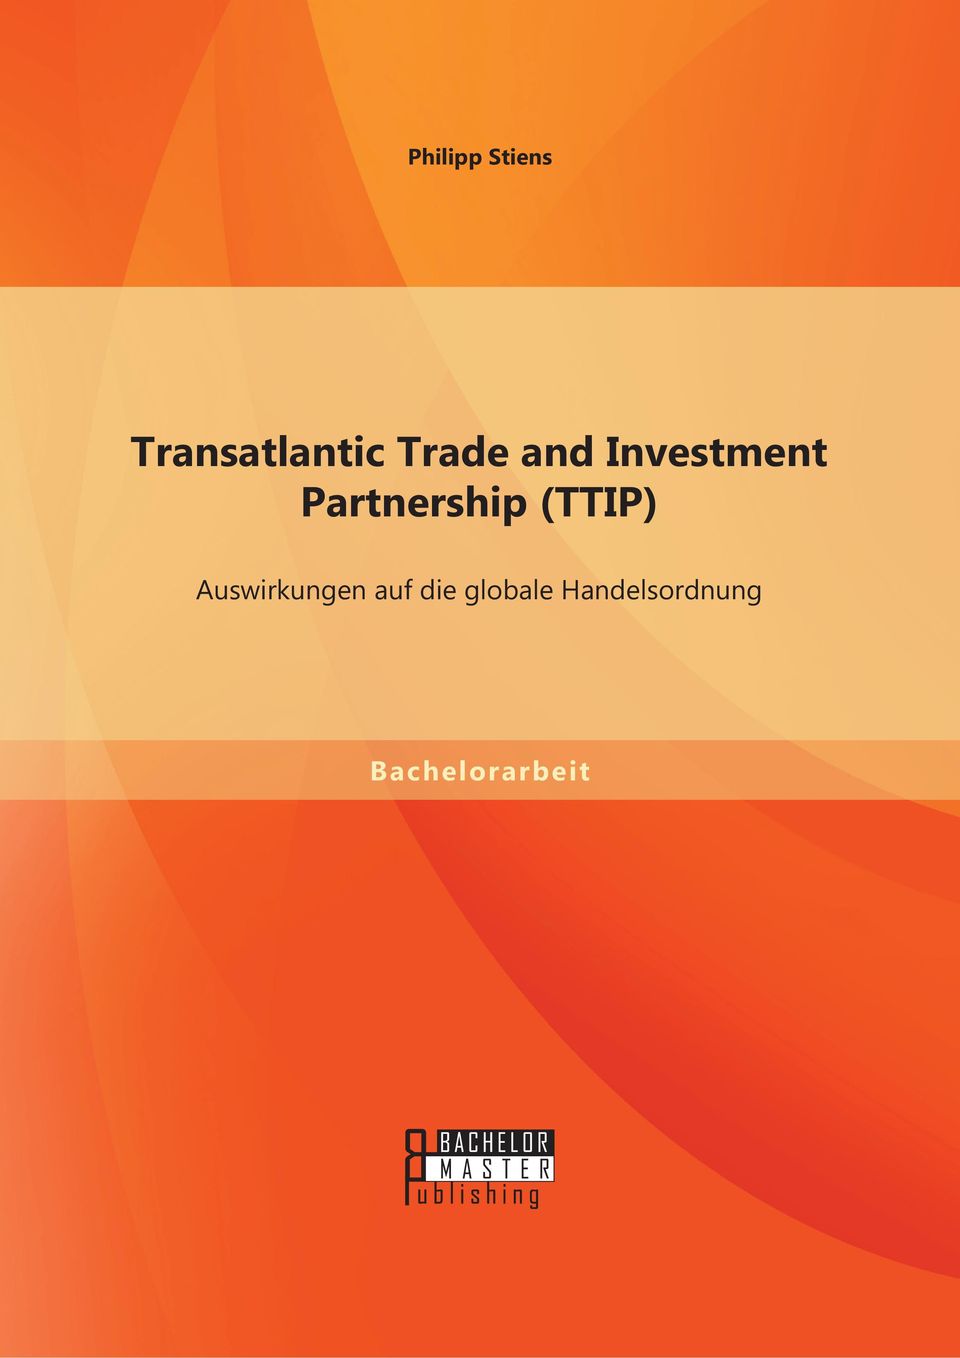 Partnership (TTIP) Auswirkungen